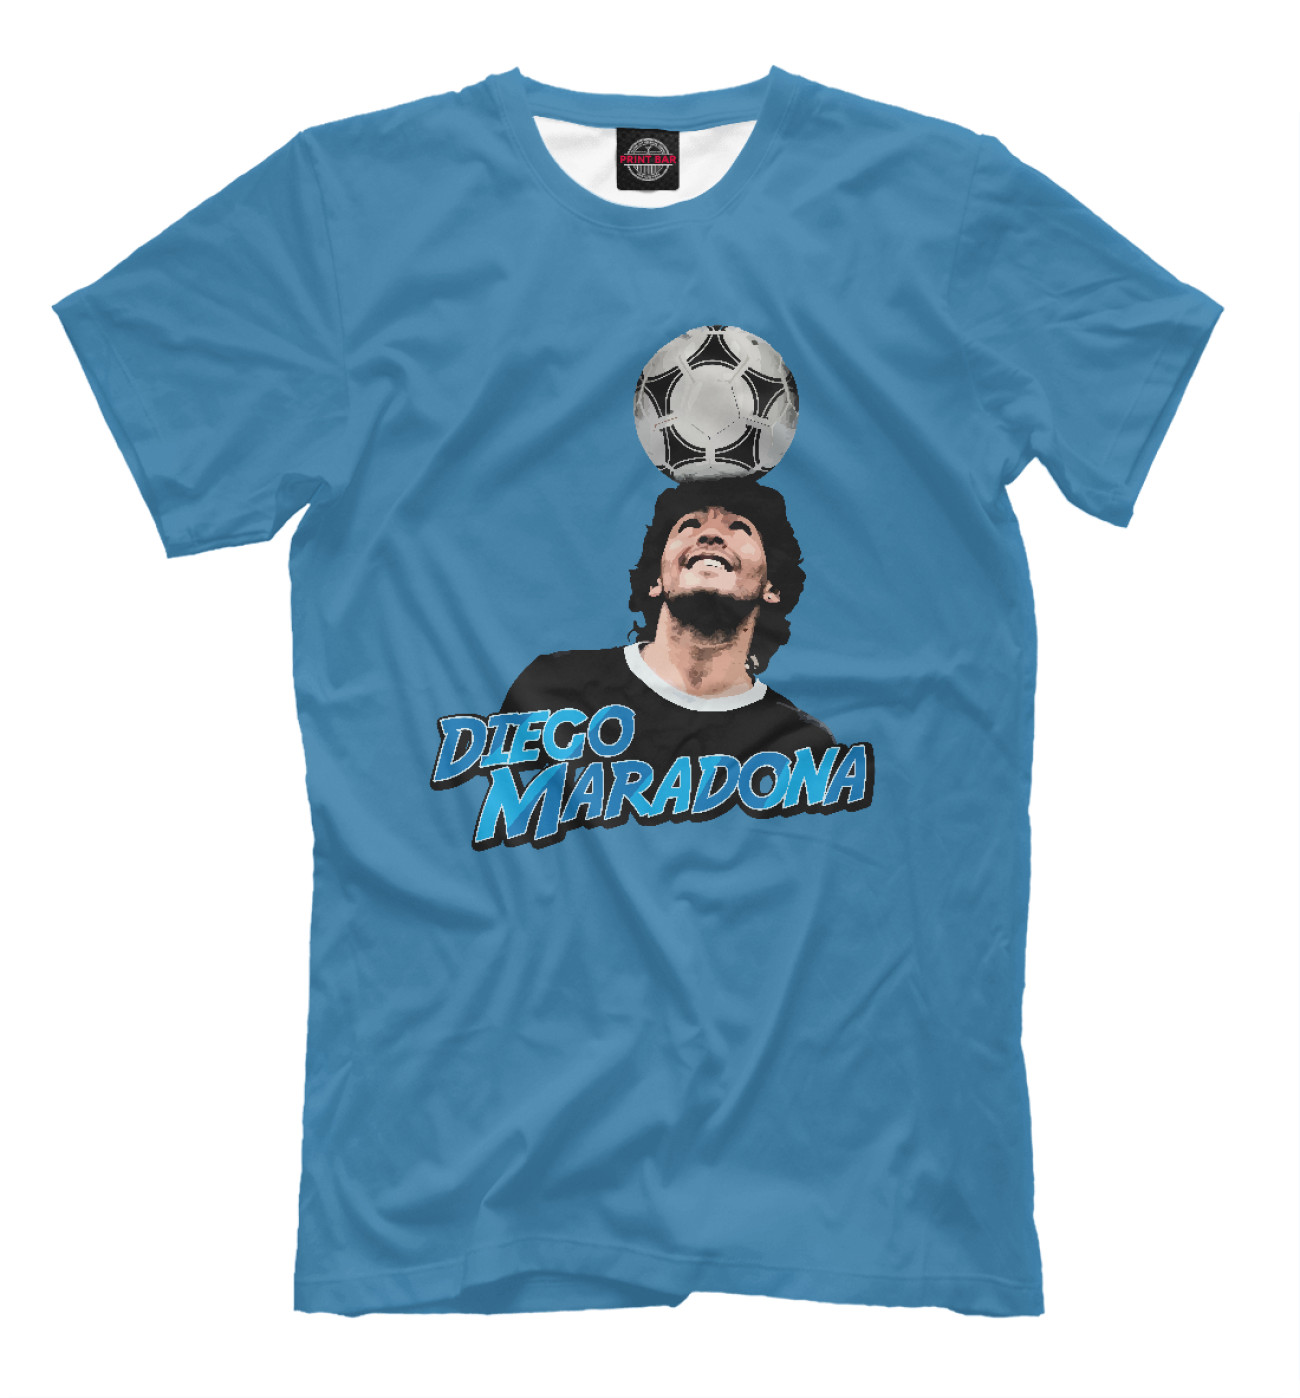 Мужская Футболка Diego Maradona, артикул: FLT-667856-fut-2